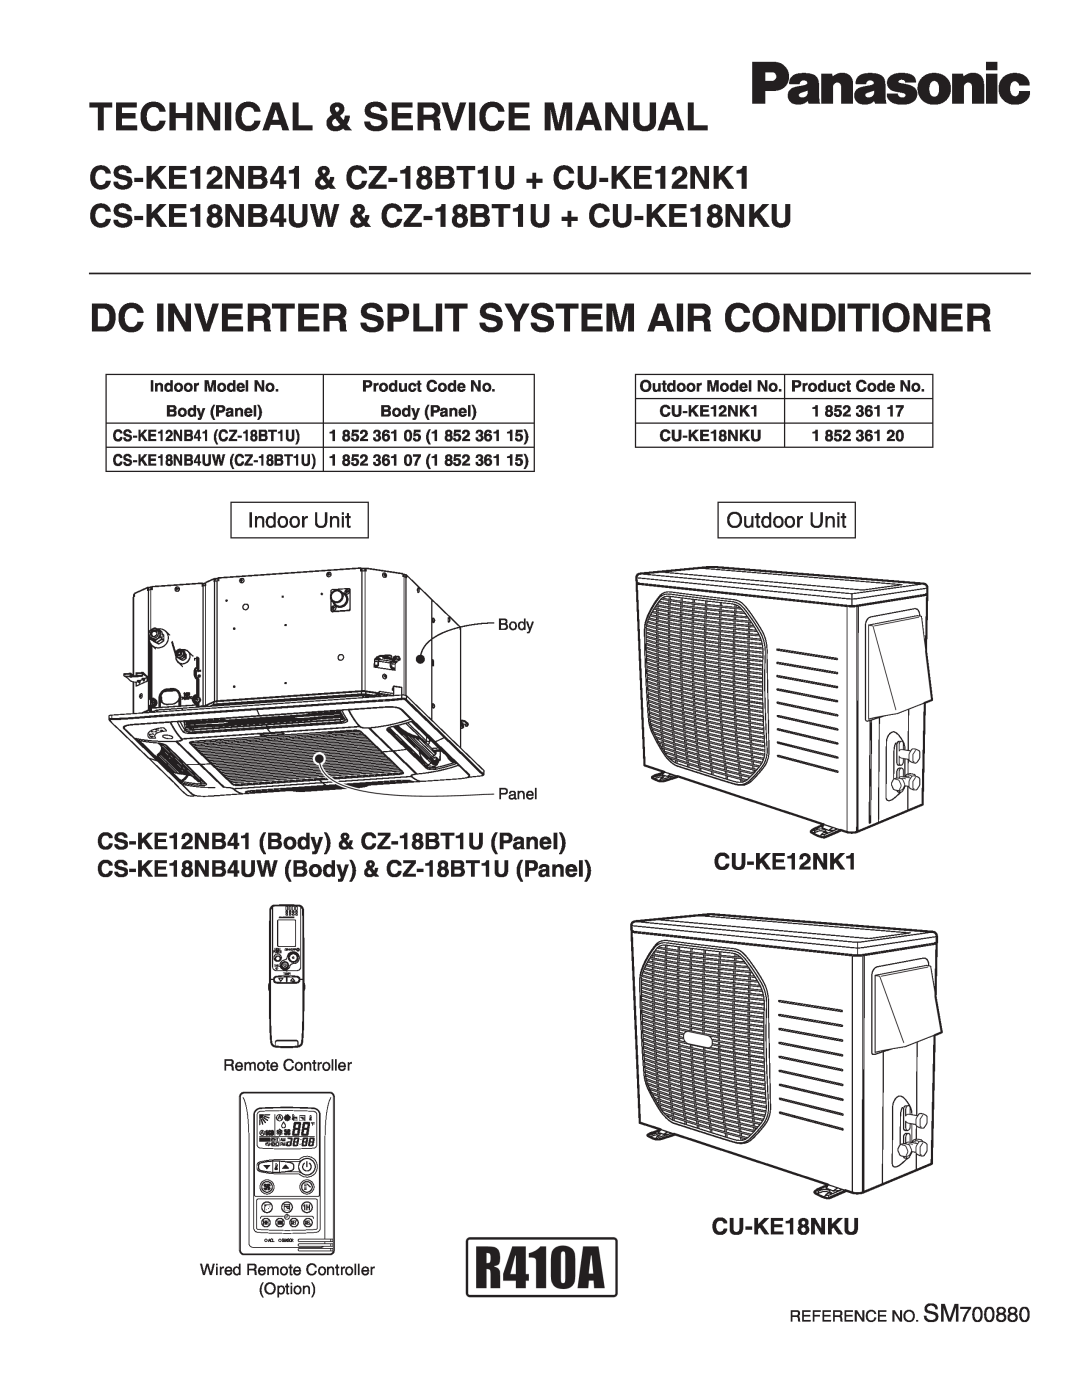 Panasonic service manual CU-KE12NK1 CU-KE18NKU, Indoor Unit, Outdoor Unit, Dc Inverter Split System Air Conditioner 